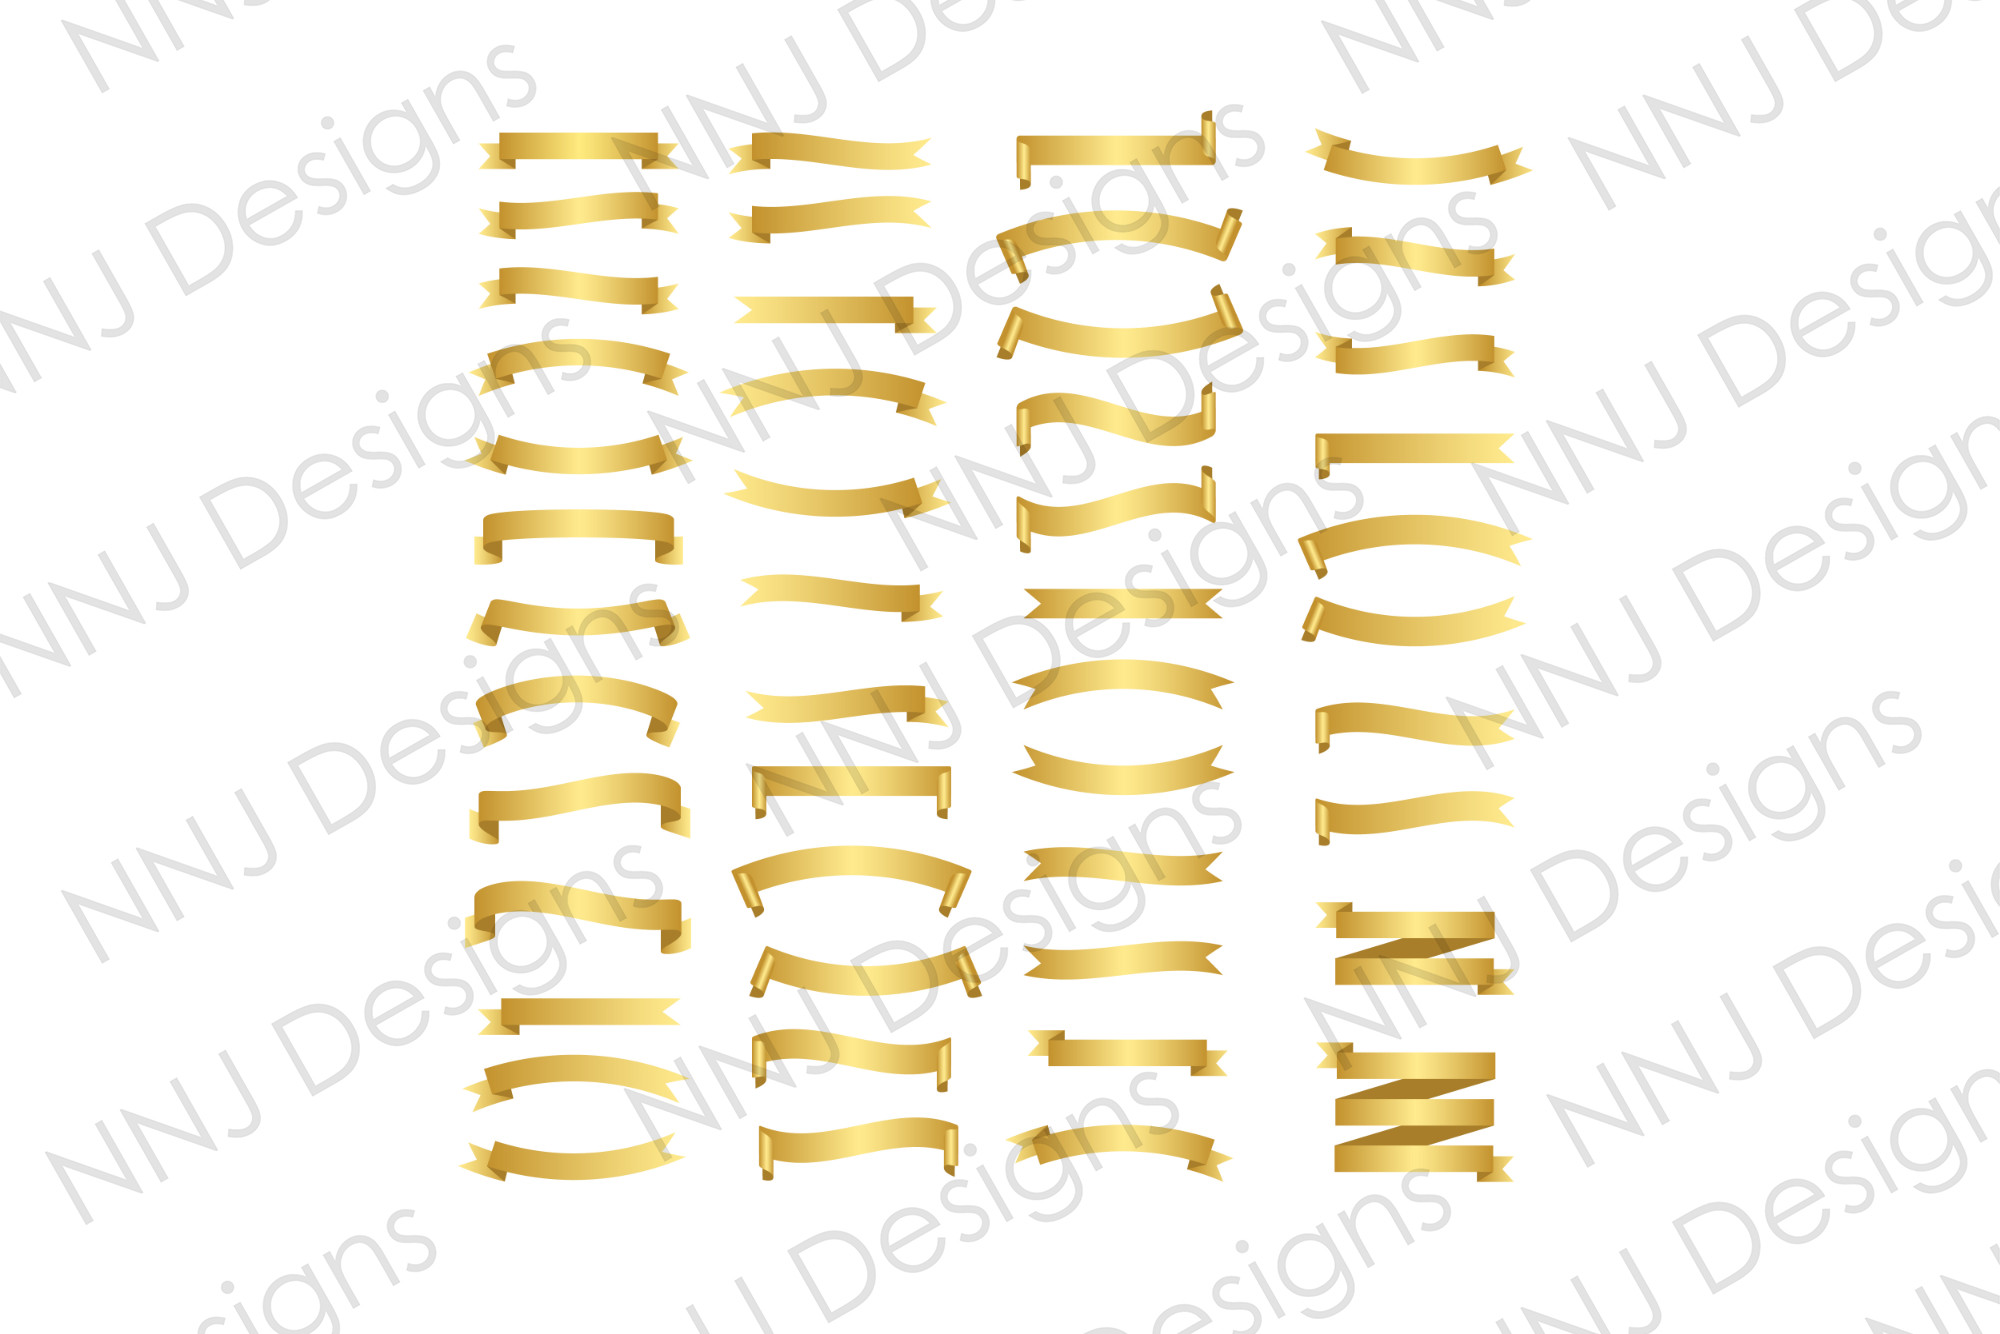 gold ribbon banner clip art